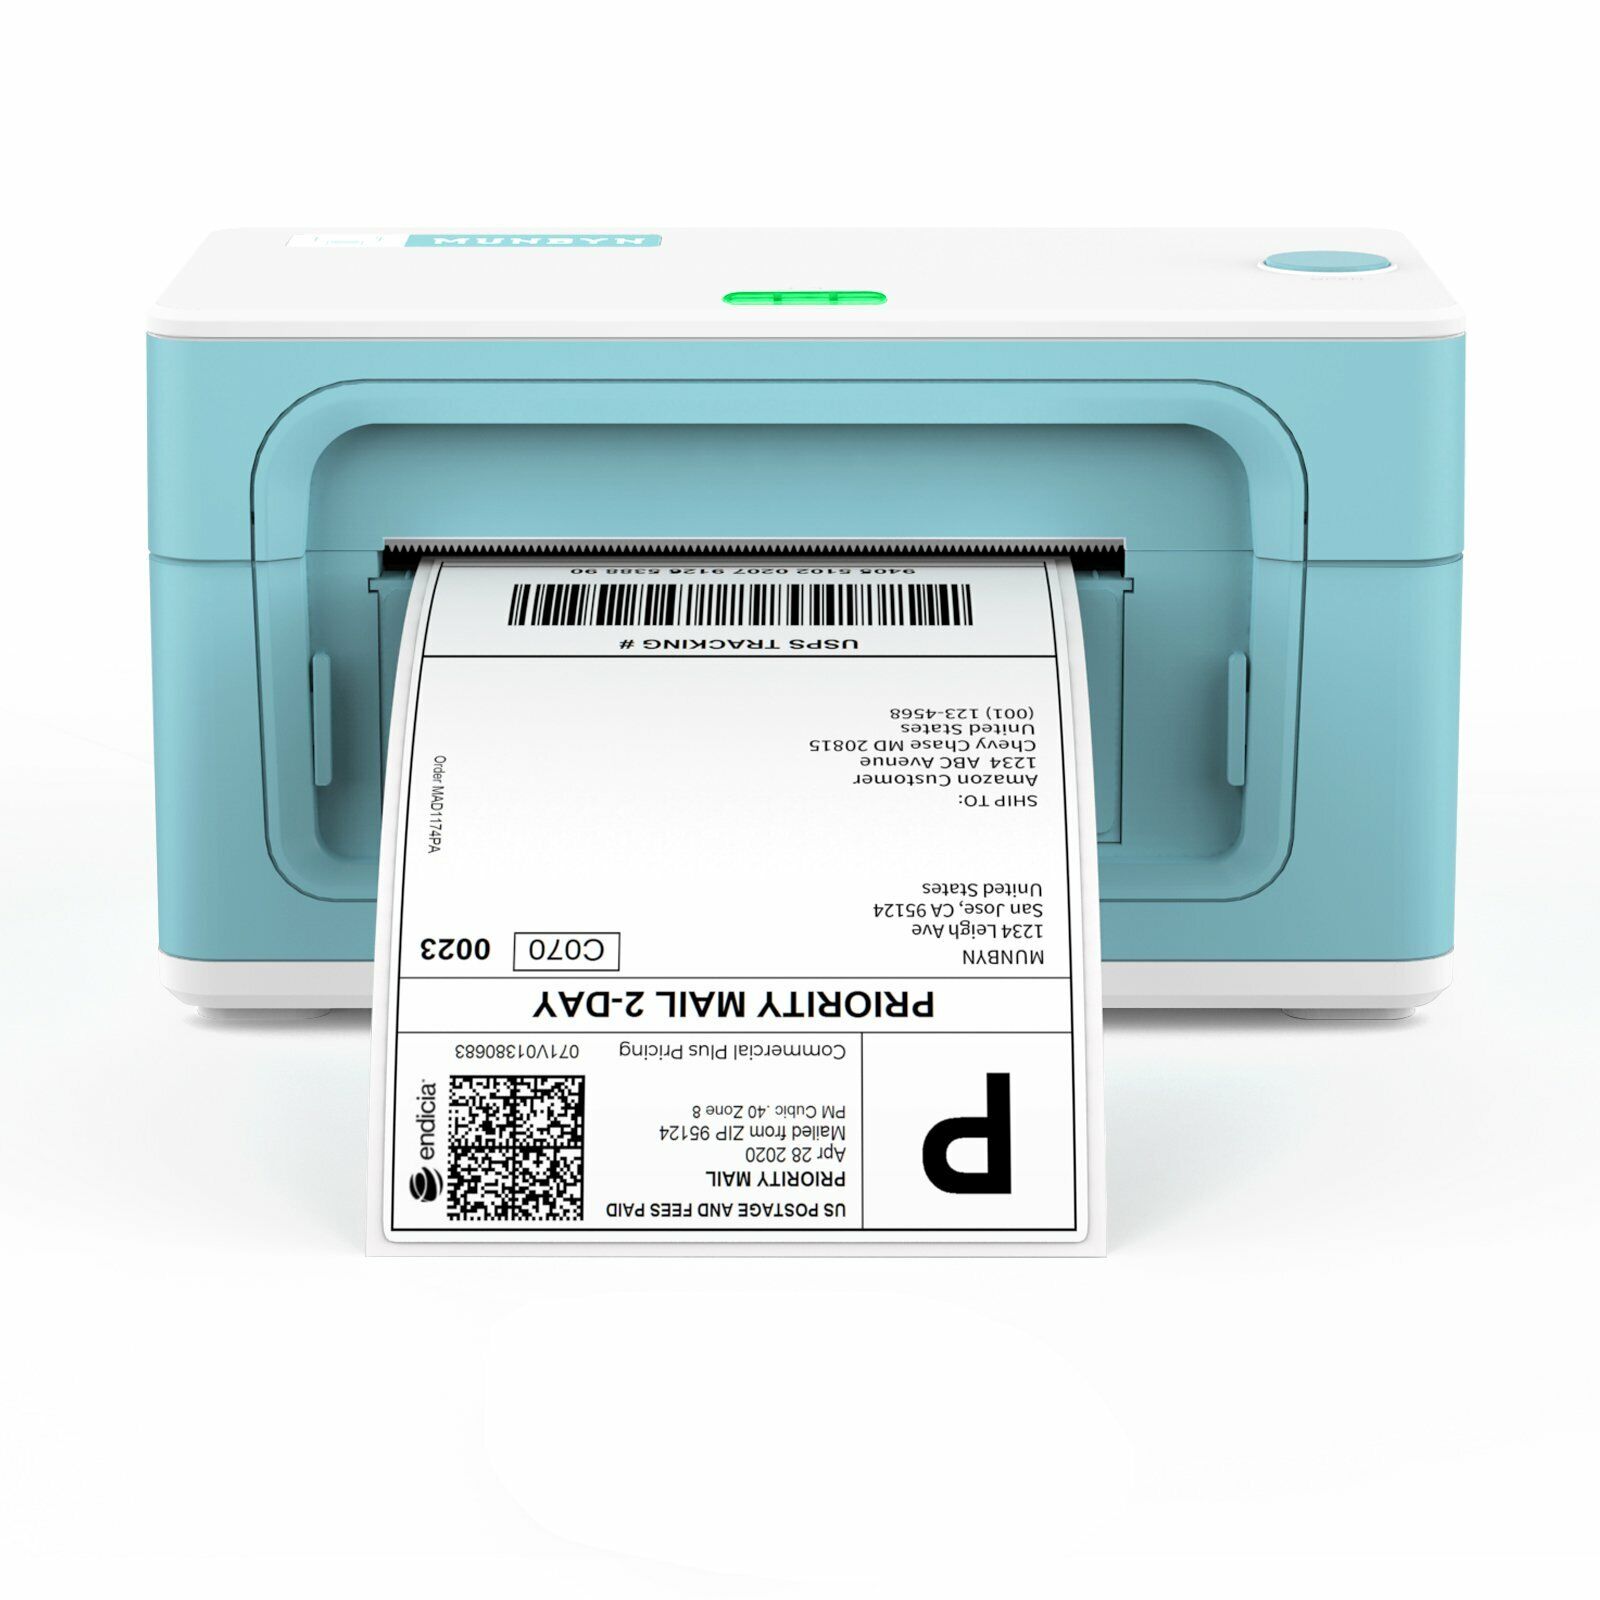 MUNBYN Thermal Shipping Label Printer for UPS USPS FedEx eBay Etsy Amazon PayPal